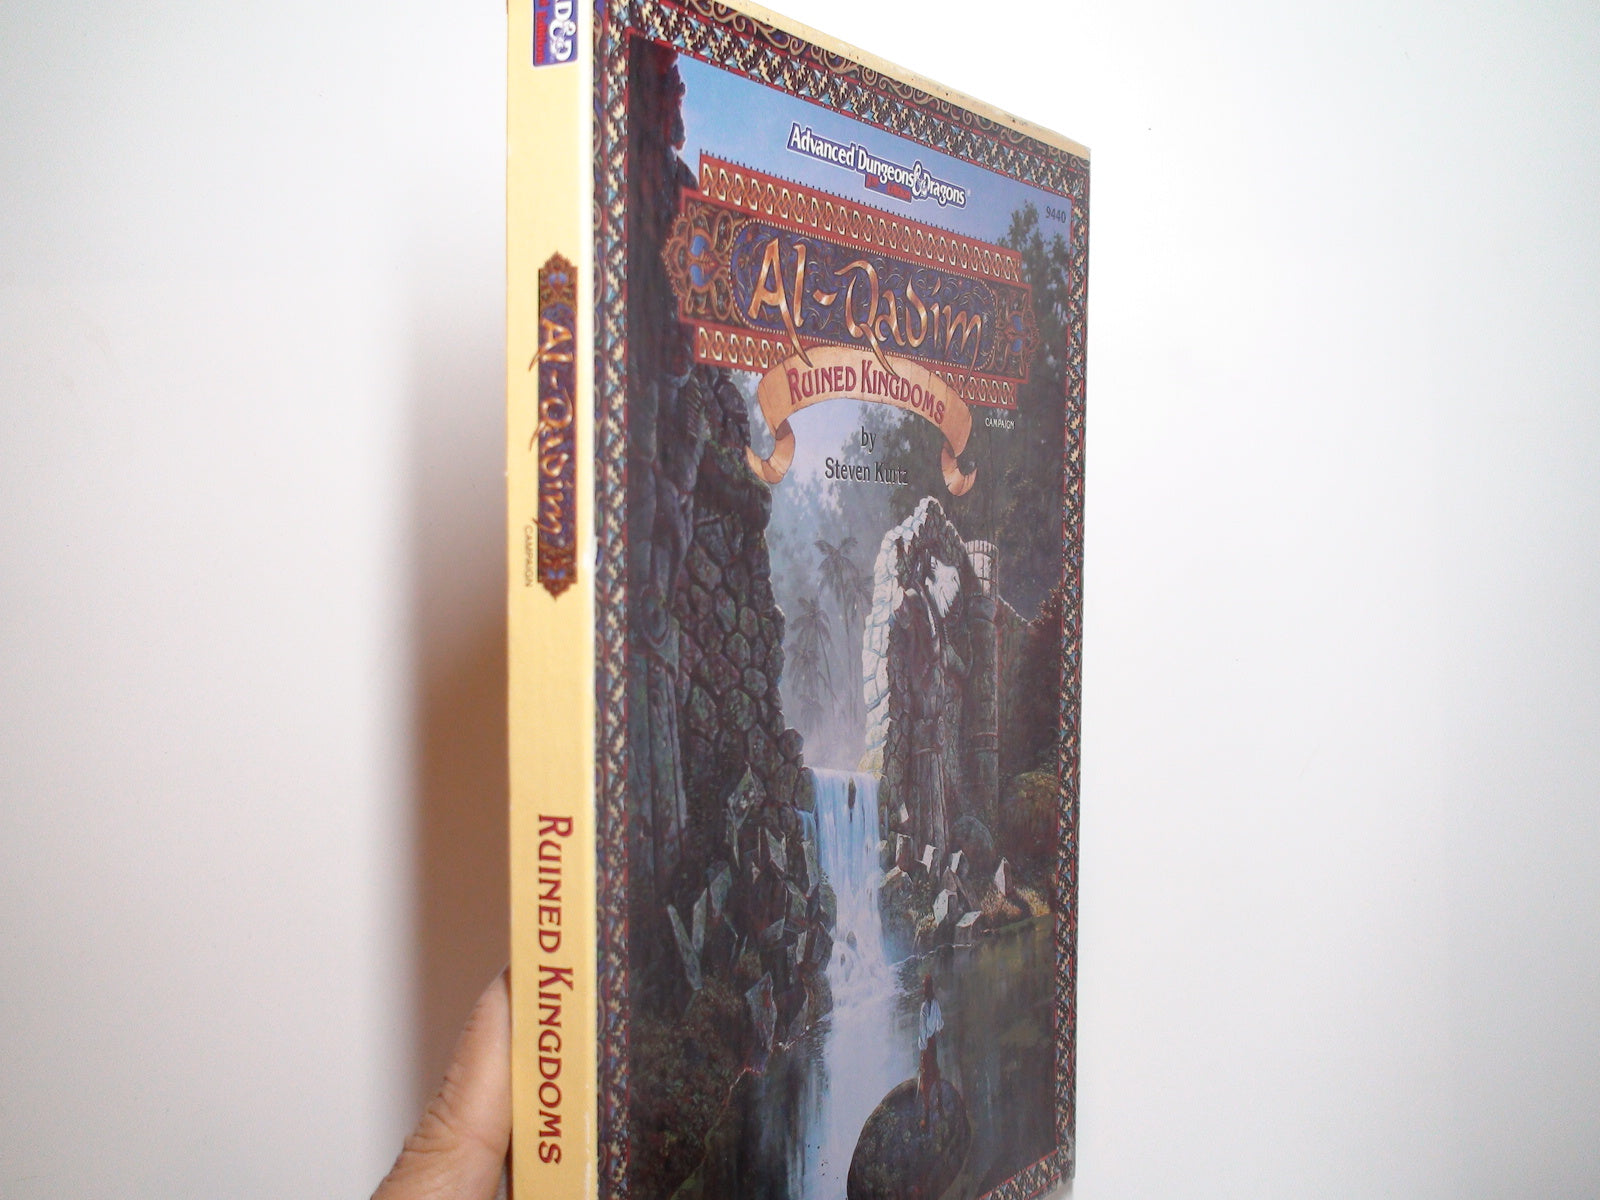 Al-Qadim Ruined Kingdoms Box Set #9440, INCOMPLETE, TSR AD&D 2E, 1994